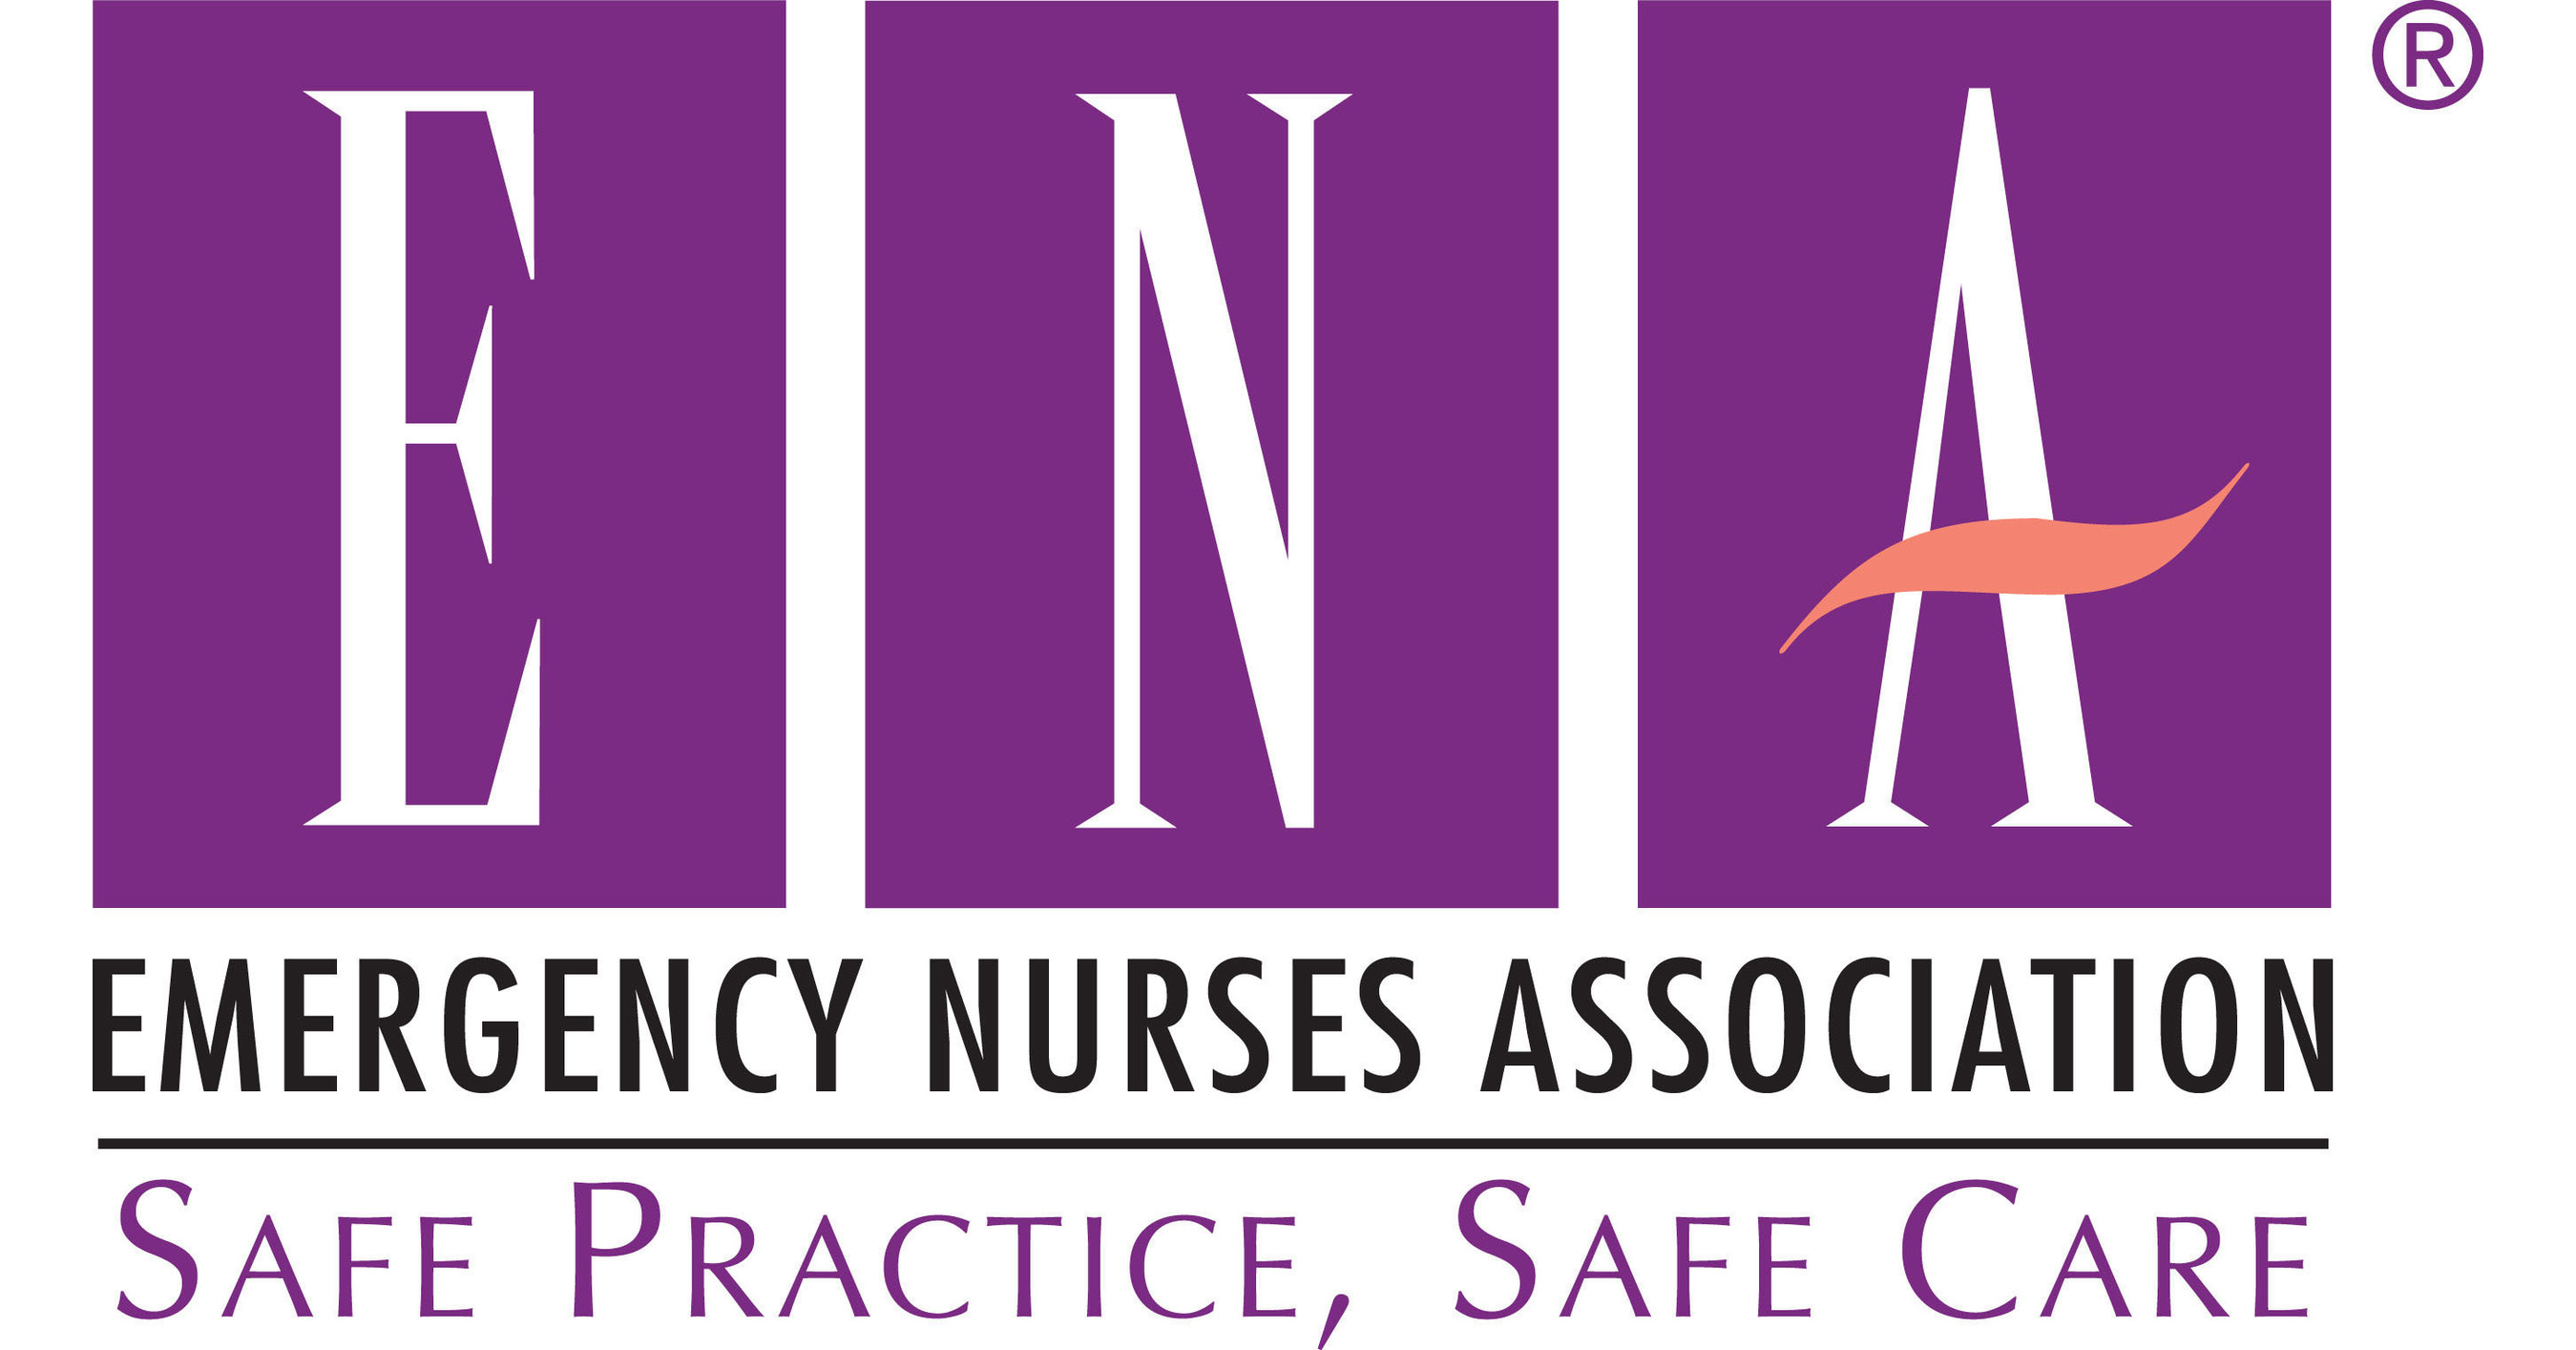 Karen K. Wiley, MSN, RN, CEN, Takes Office as Emergency Nurses